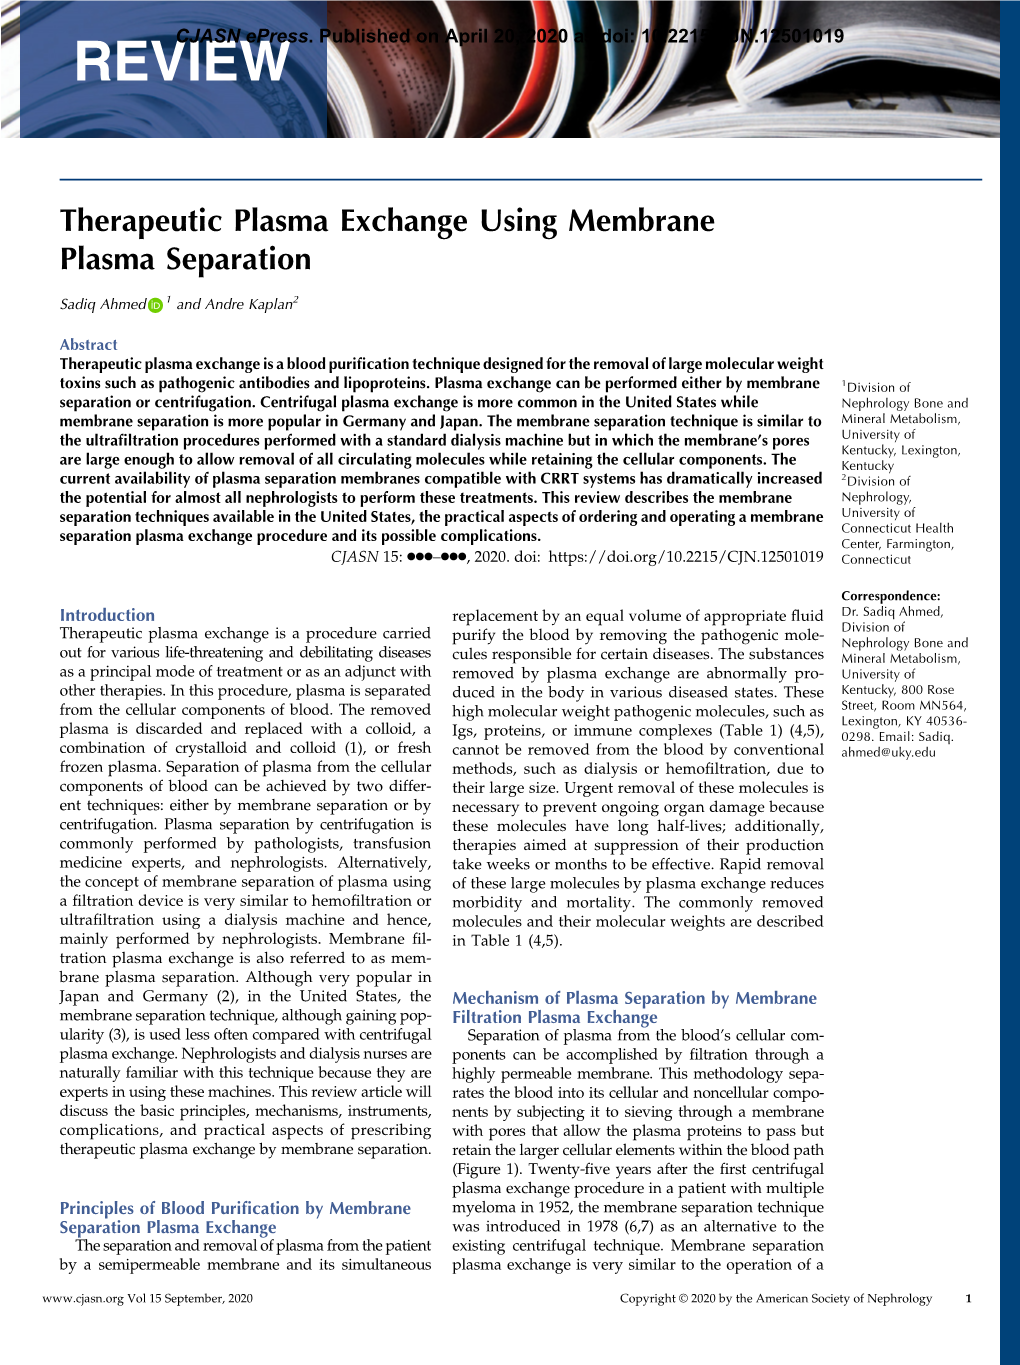 Therapeutic Plasma Exchange Using Membrane Plasma Separation